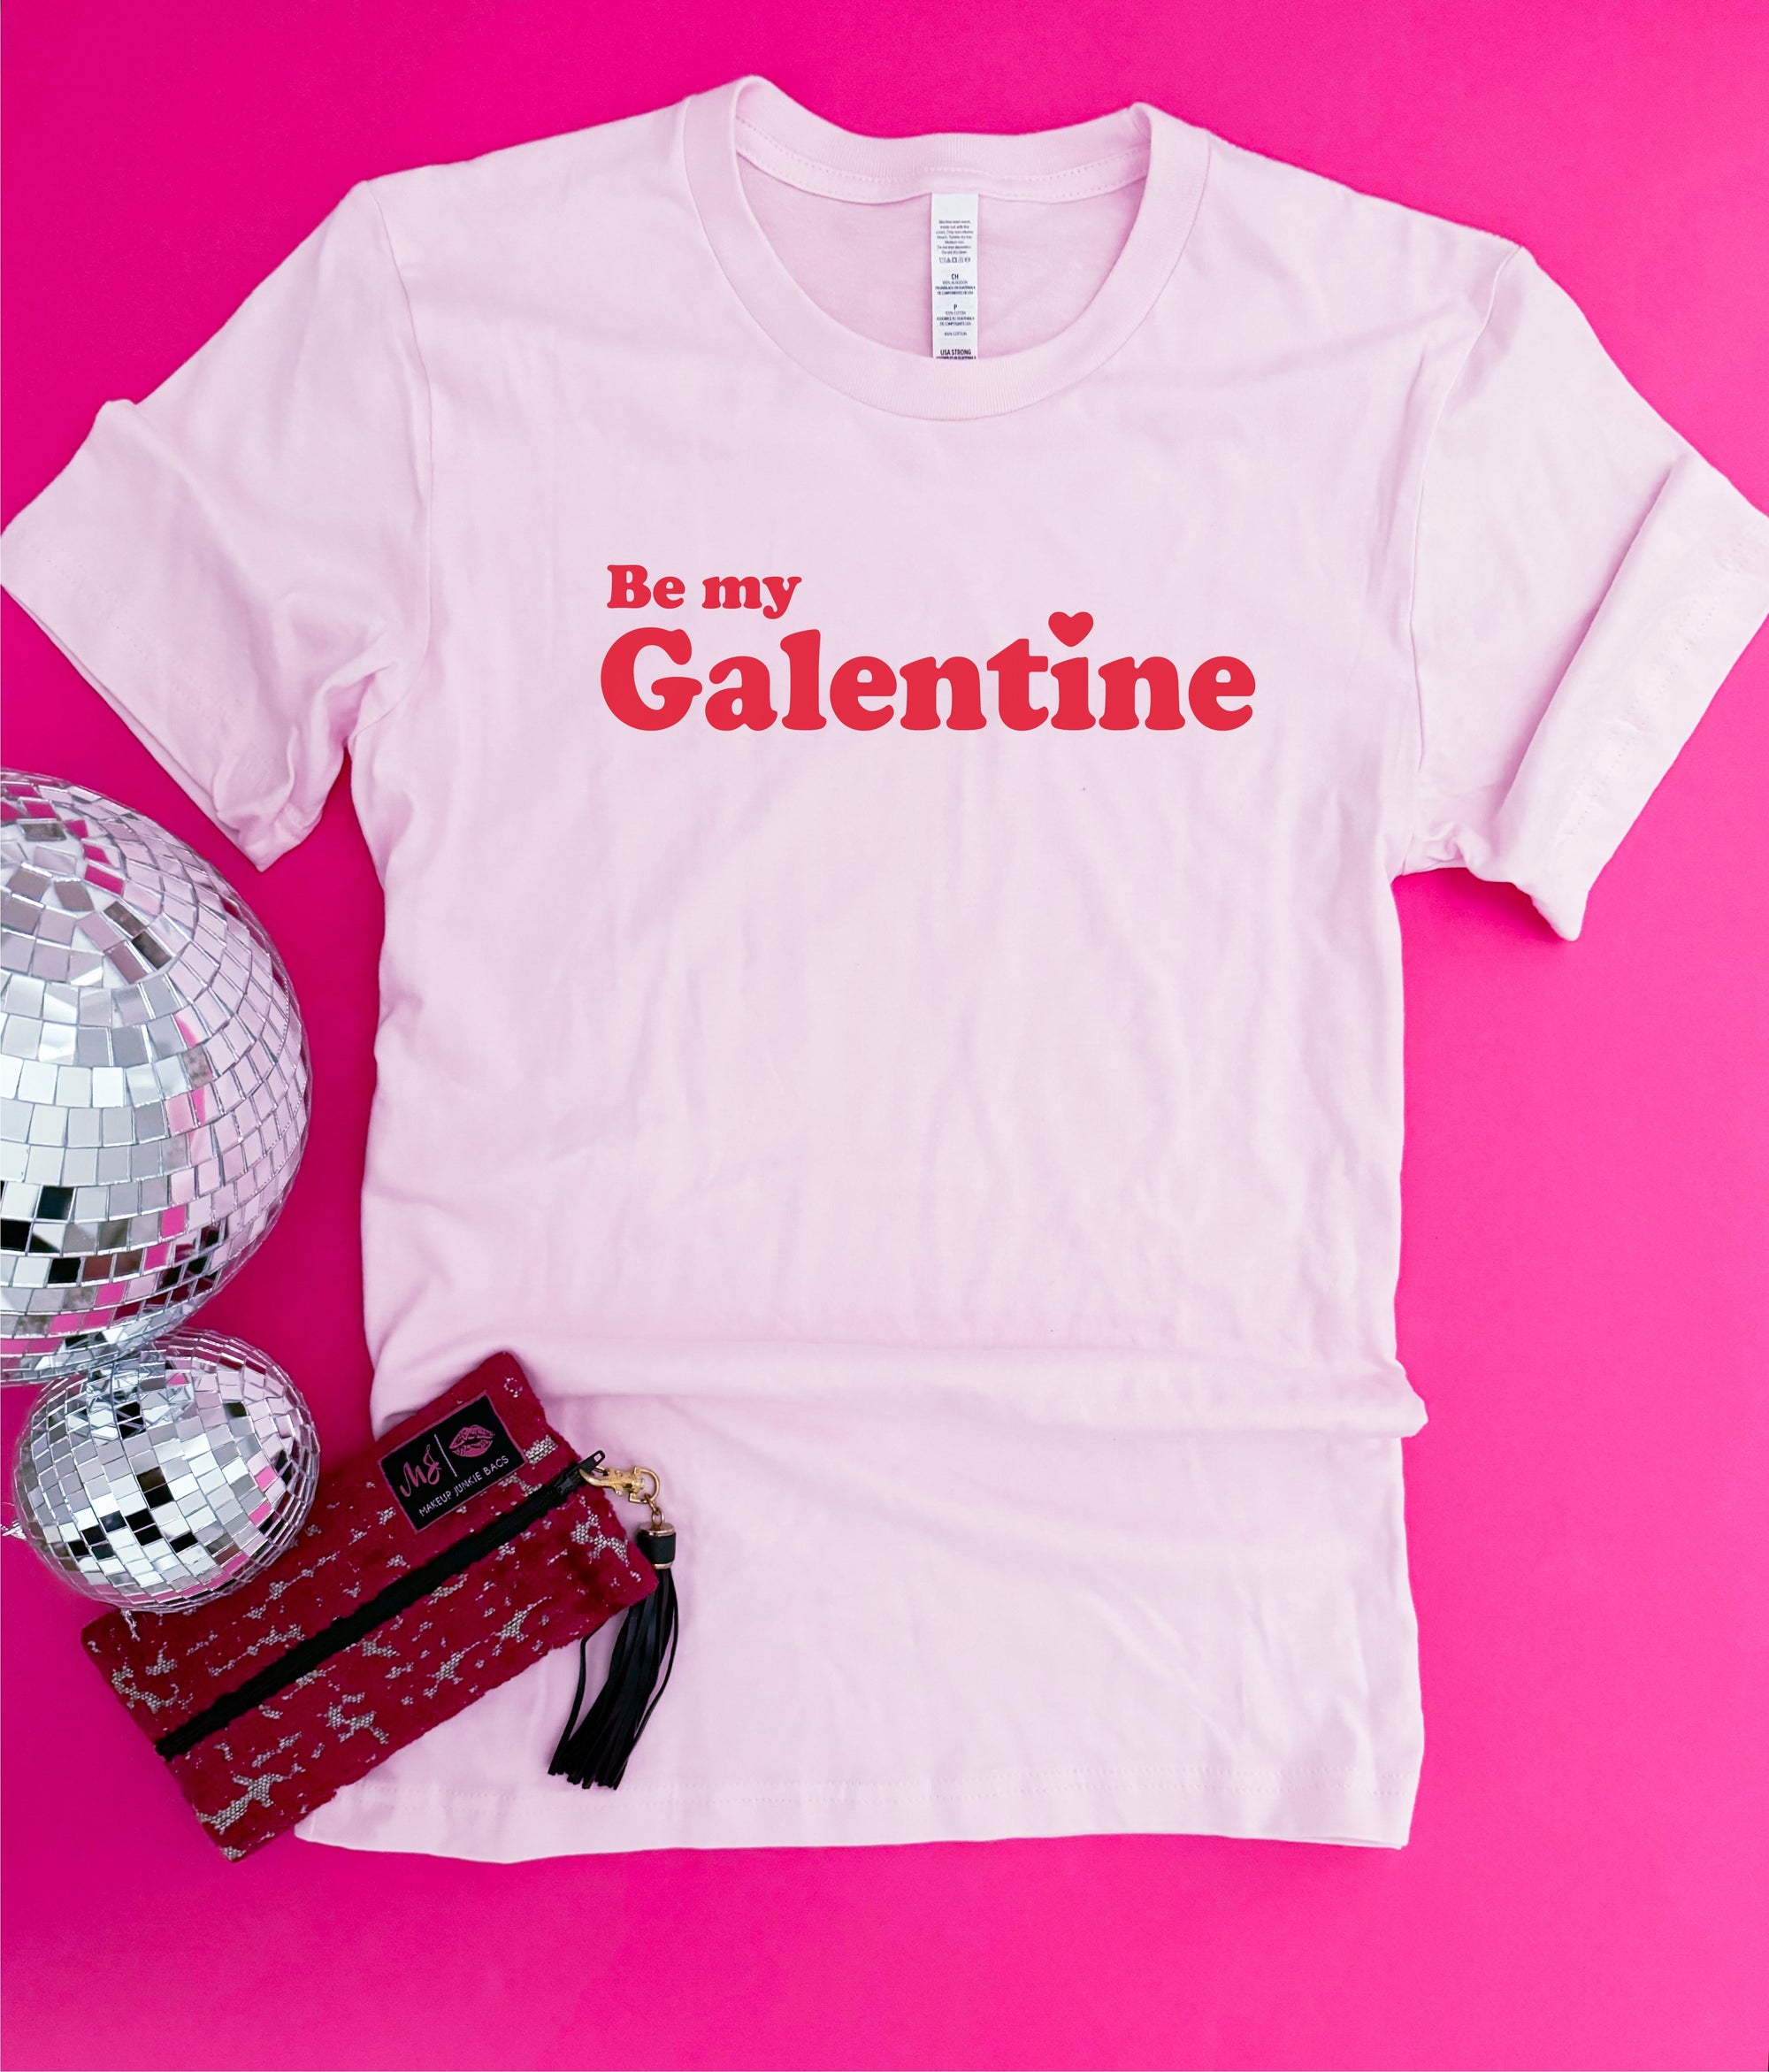 Be my Galentine tee Short sleeve valentines day tee Bella Canvas 3001 